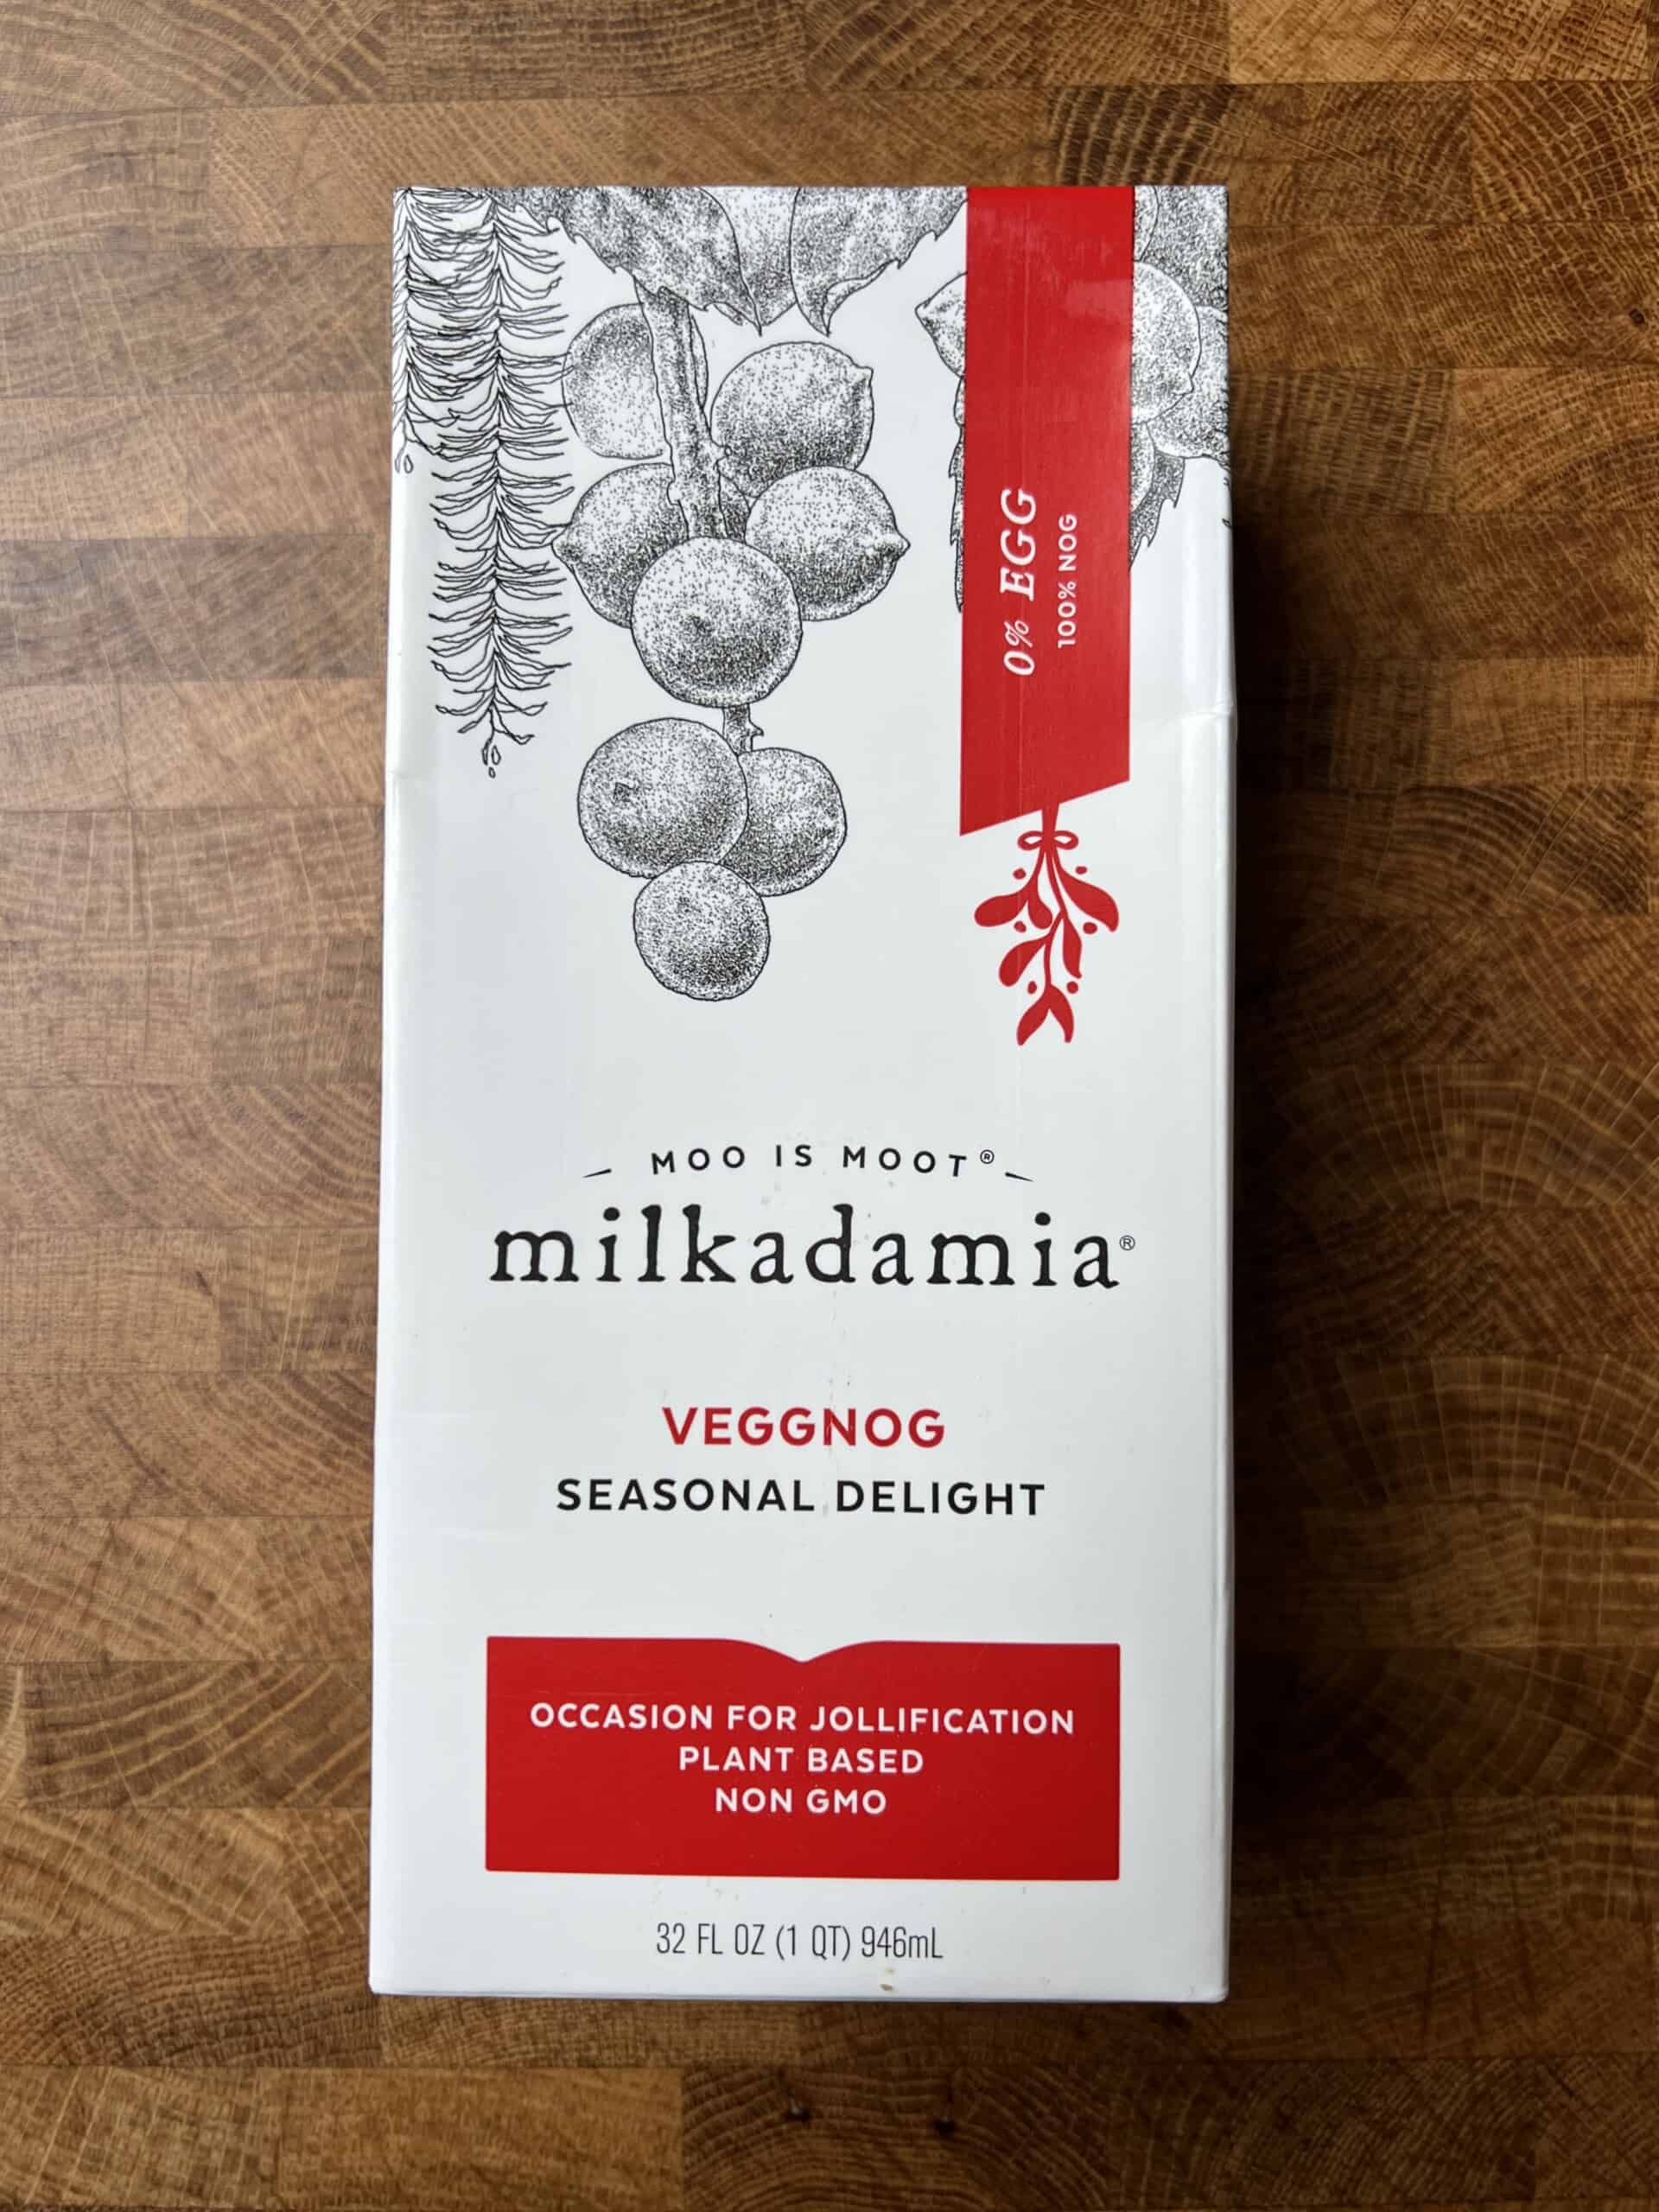 Milkadamia VeggNog carton.